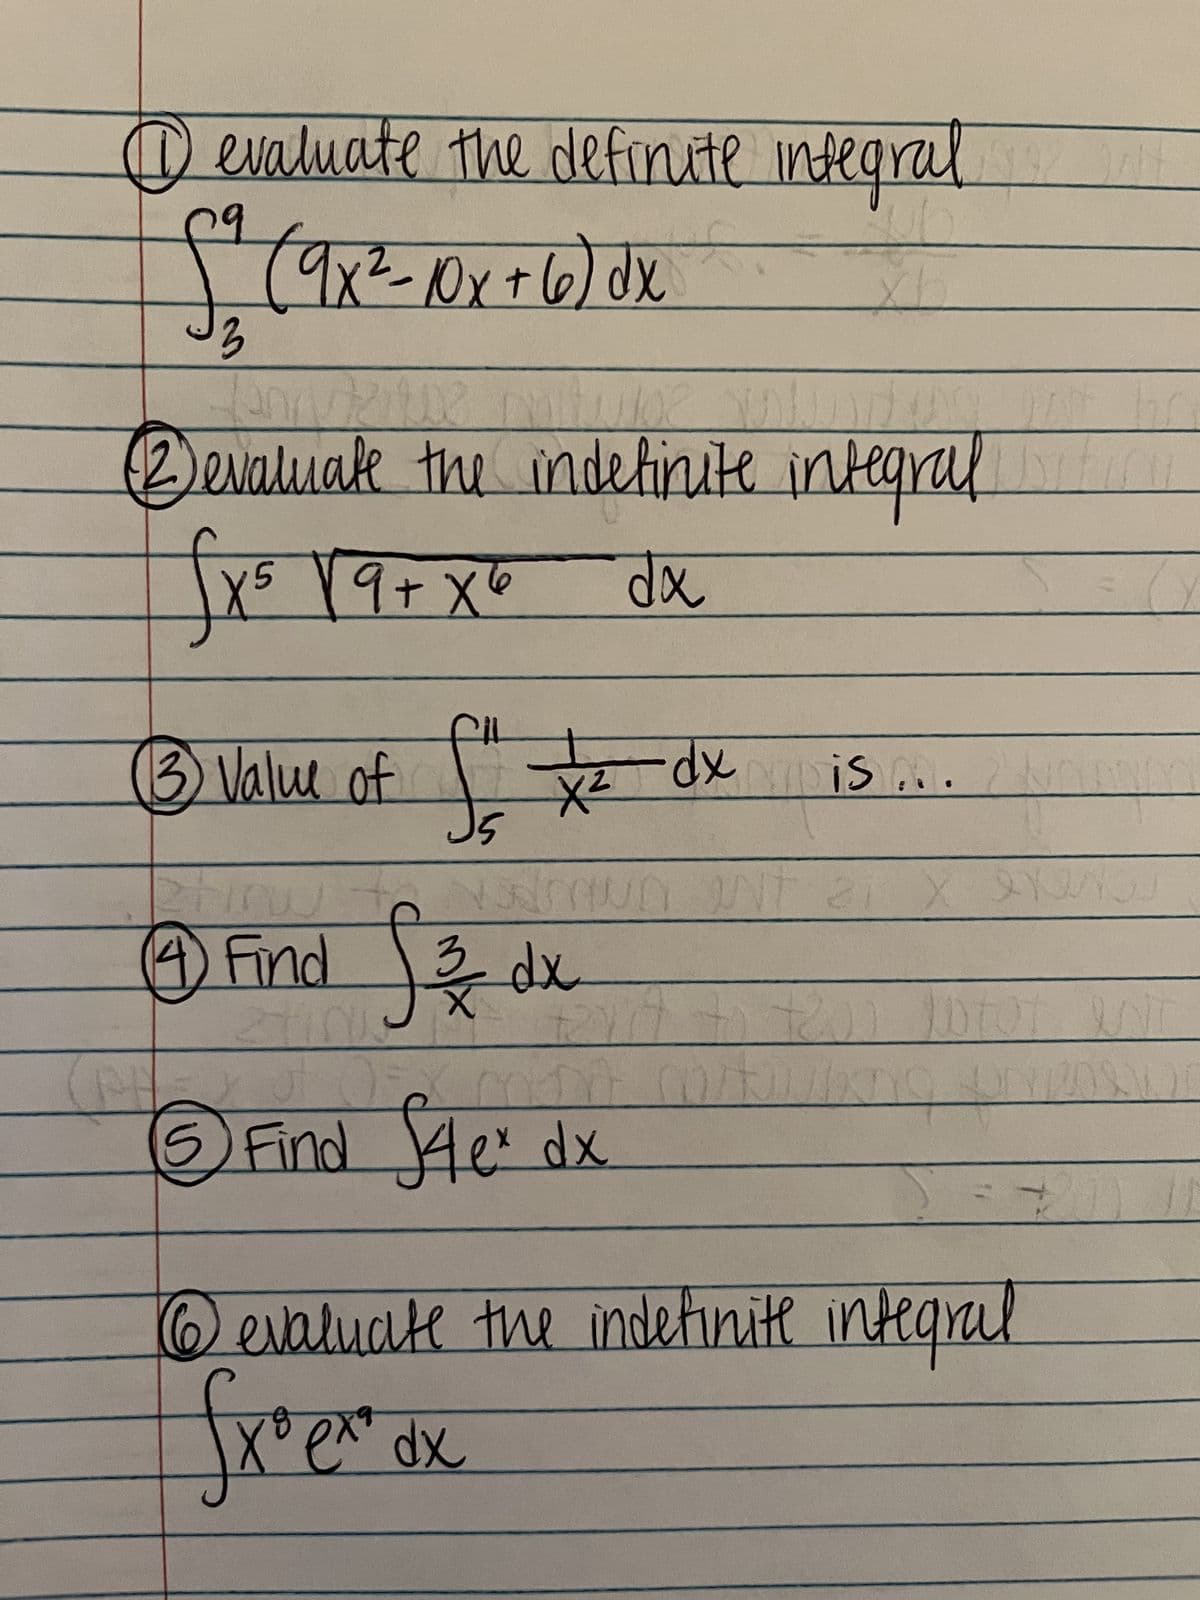 @ evaluate the definite integral
(9x² - 10x + 6) dx
4
3
ann
use you
@evaluate the indefinite integral tinu
dx
3 Value of S
CHA
5
NAMUN INT 21 X YNGJ
7
4 Find S & dx
12
211
of Of nk
ex
© Find Sie dx
6 evaluate the indefinite integral
fx° ex dx
bu
gX + bd sXf
1142
TUI
"S!xp=z
xp _ zx
(70)
OUX
SUZIN
20